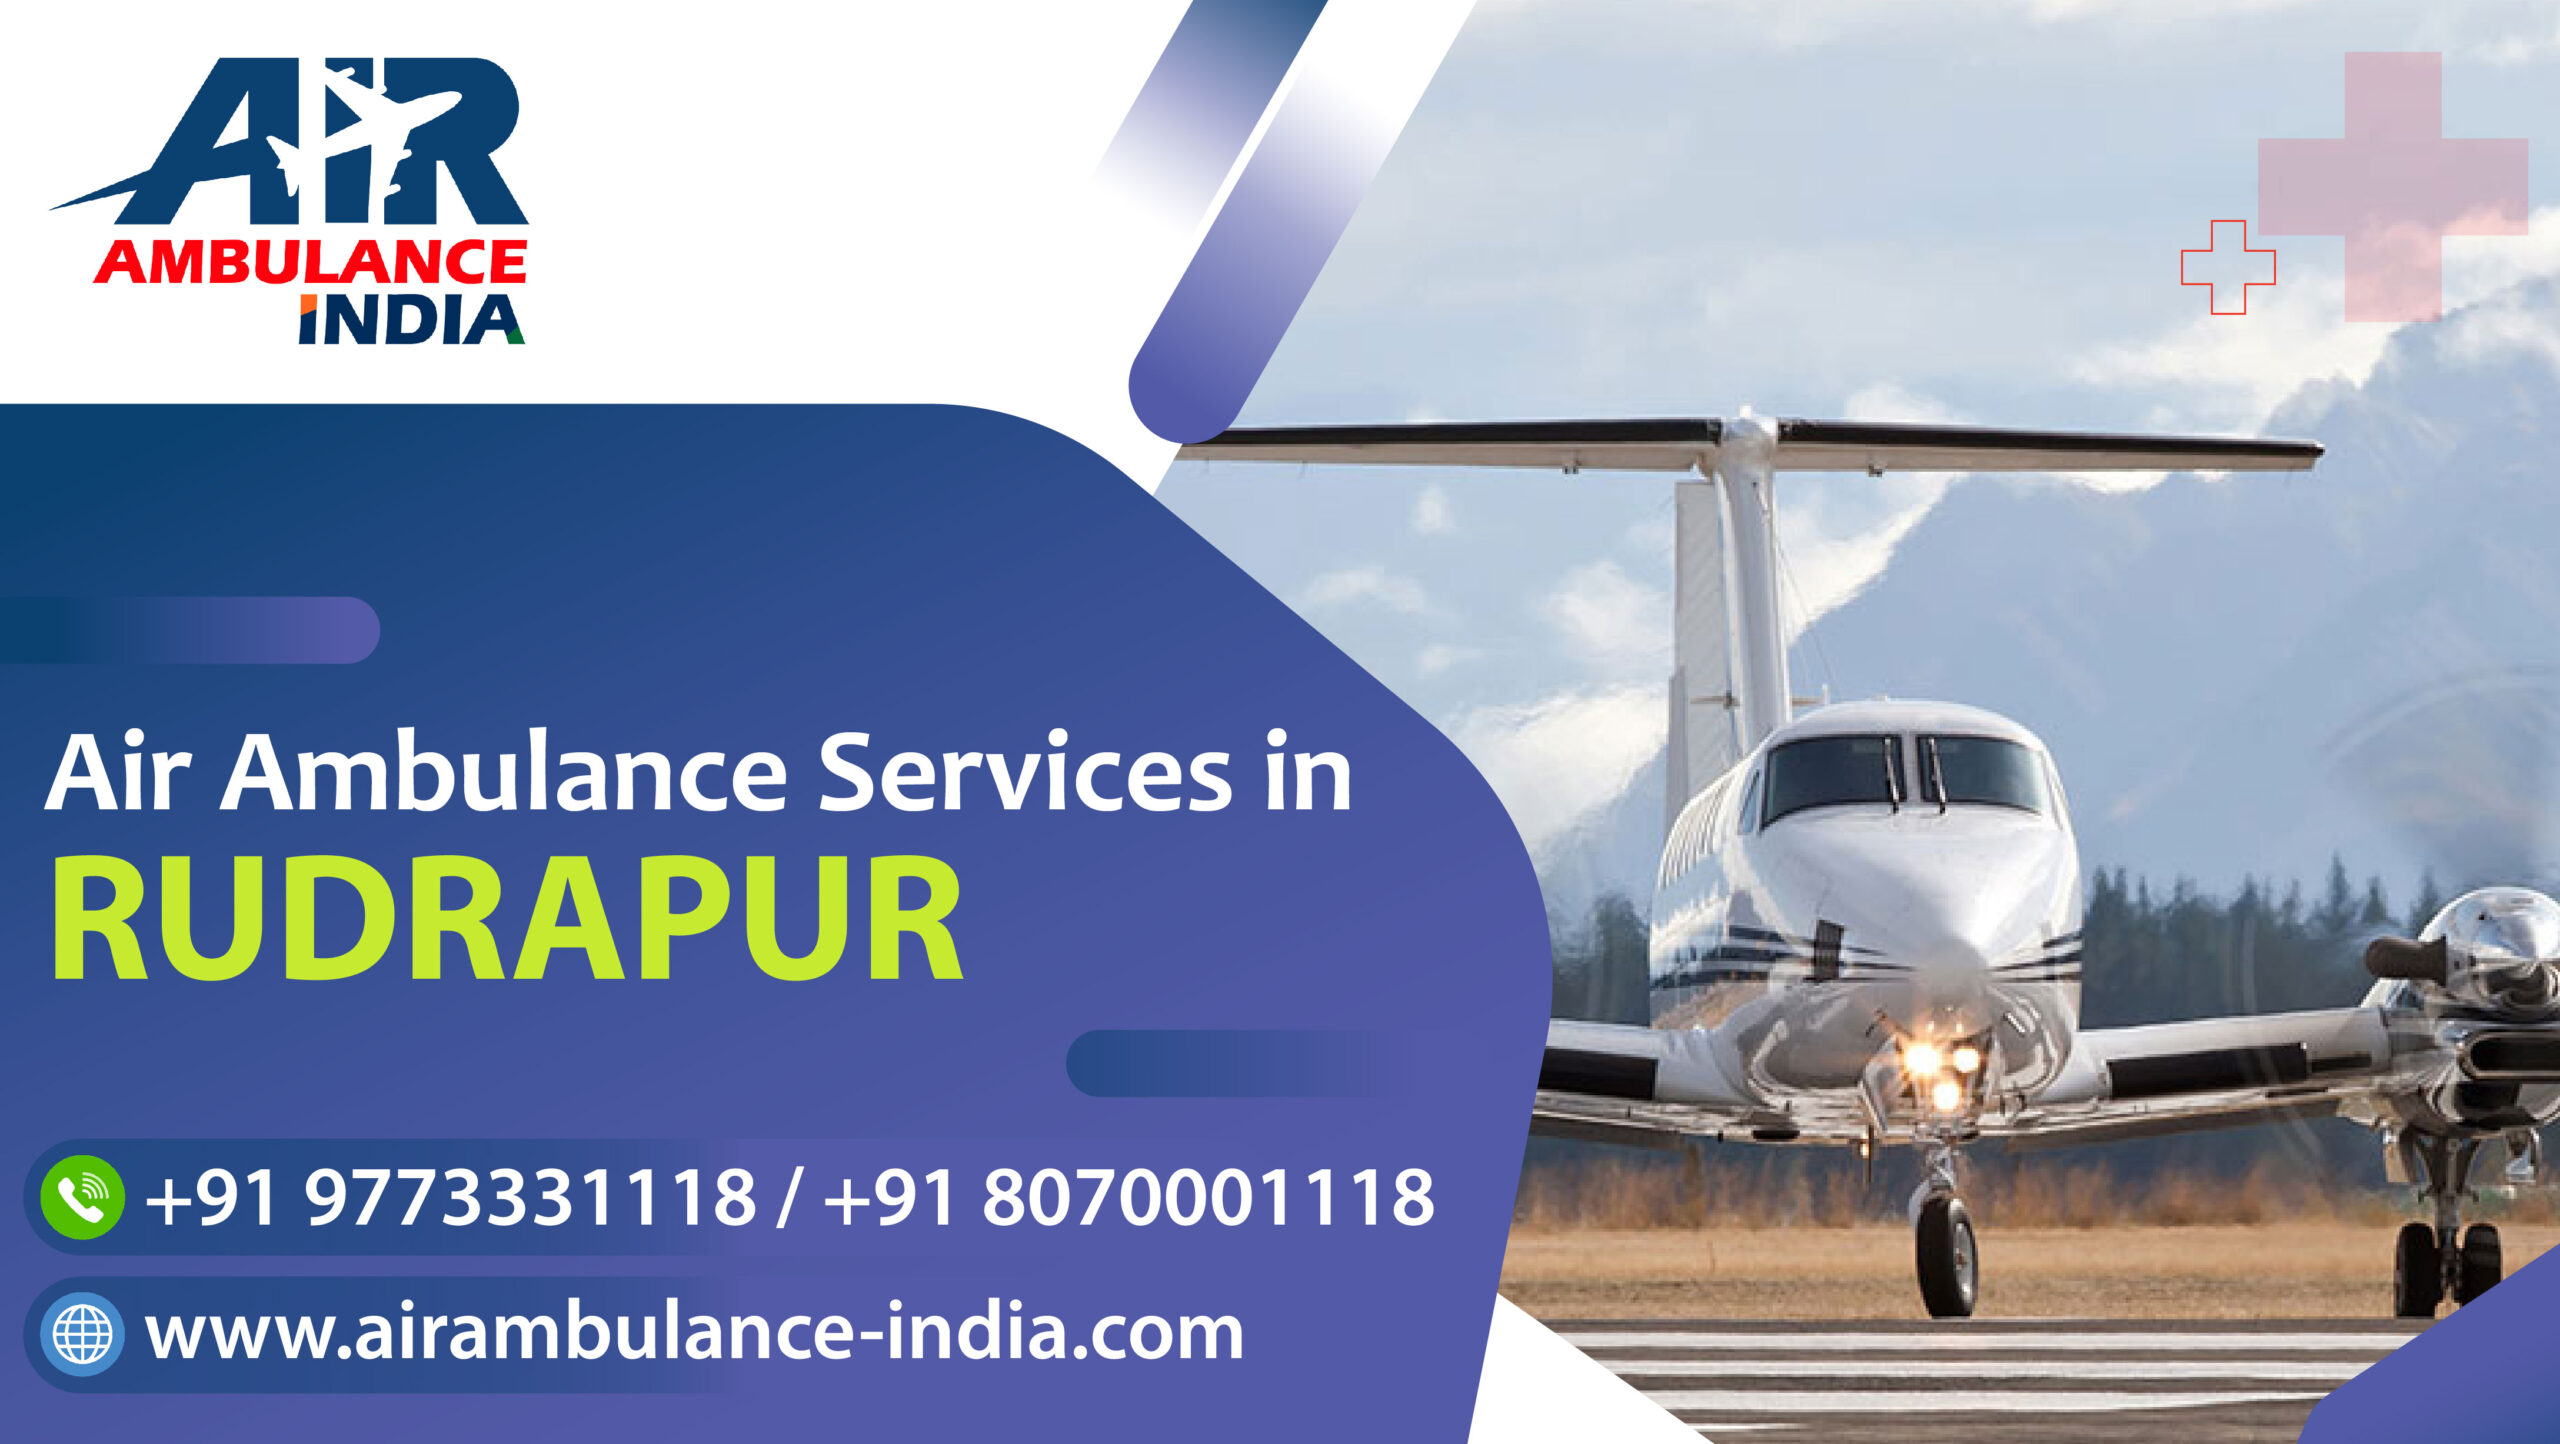 Air Ambulance Services in Rudrapur